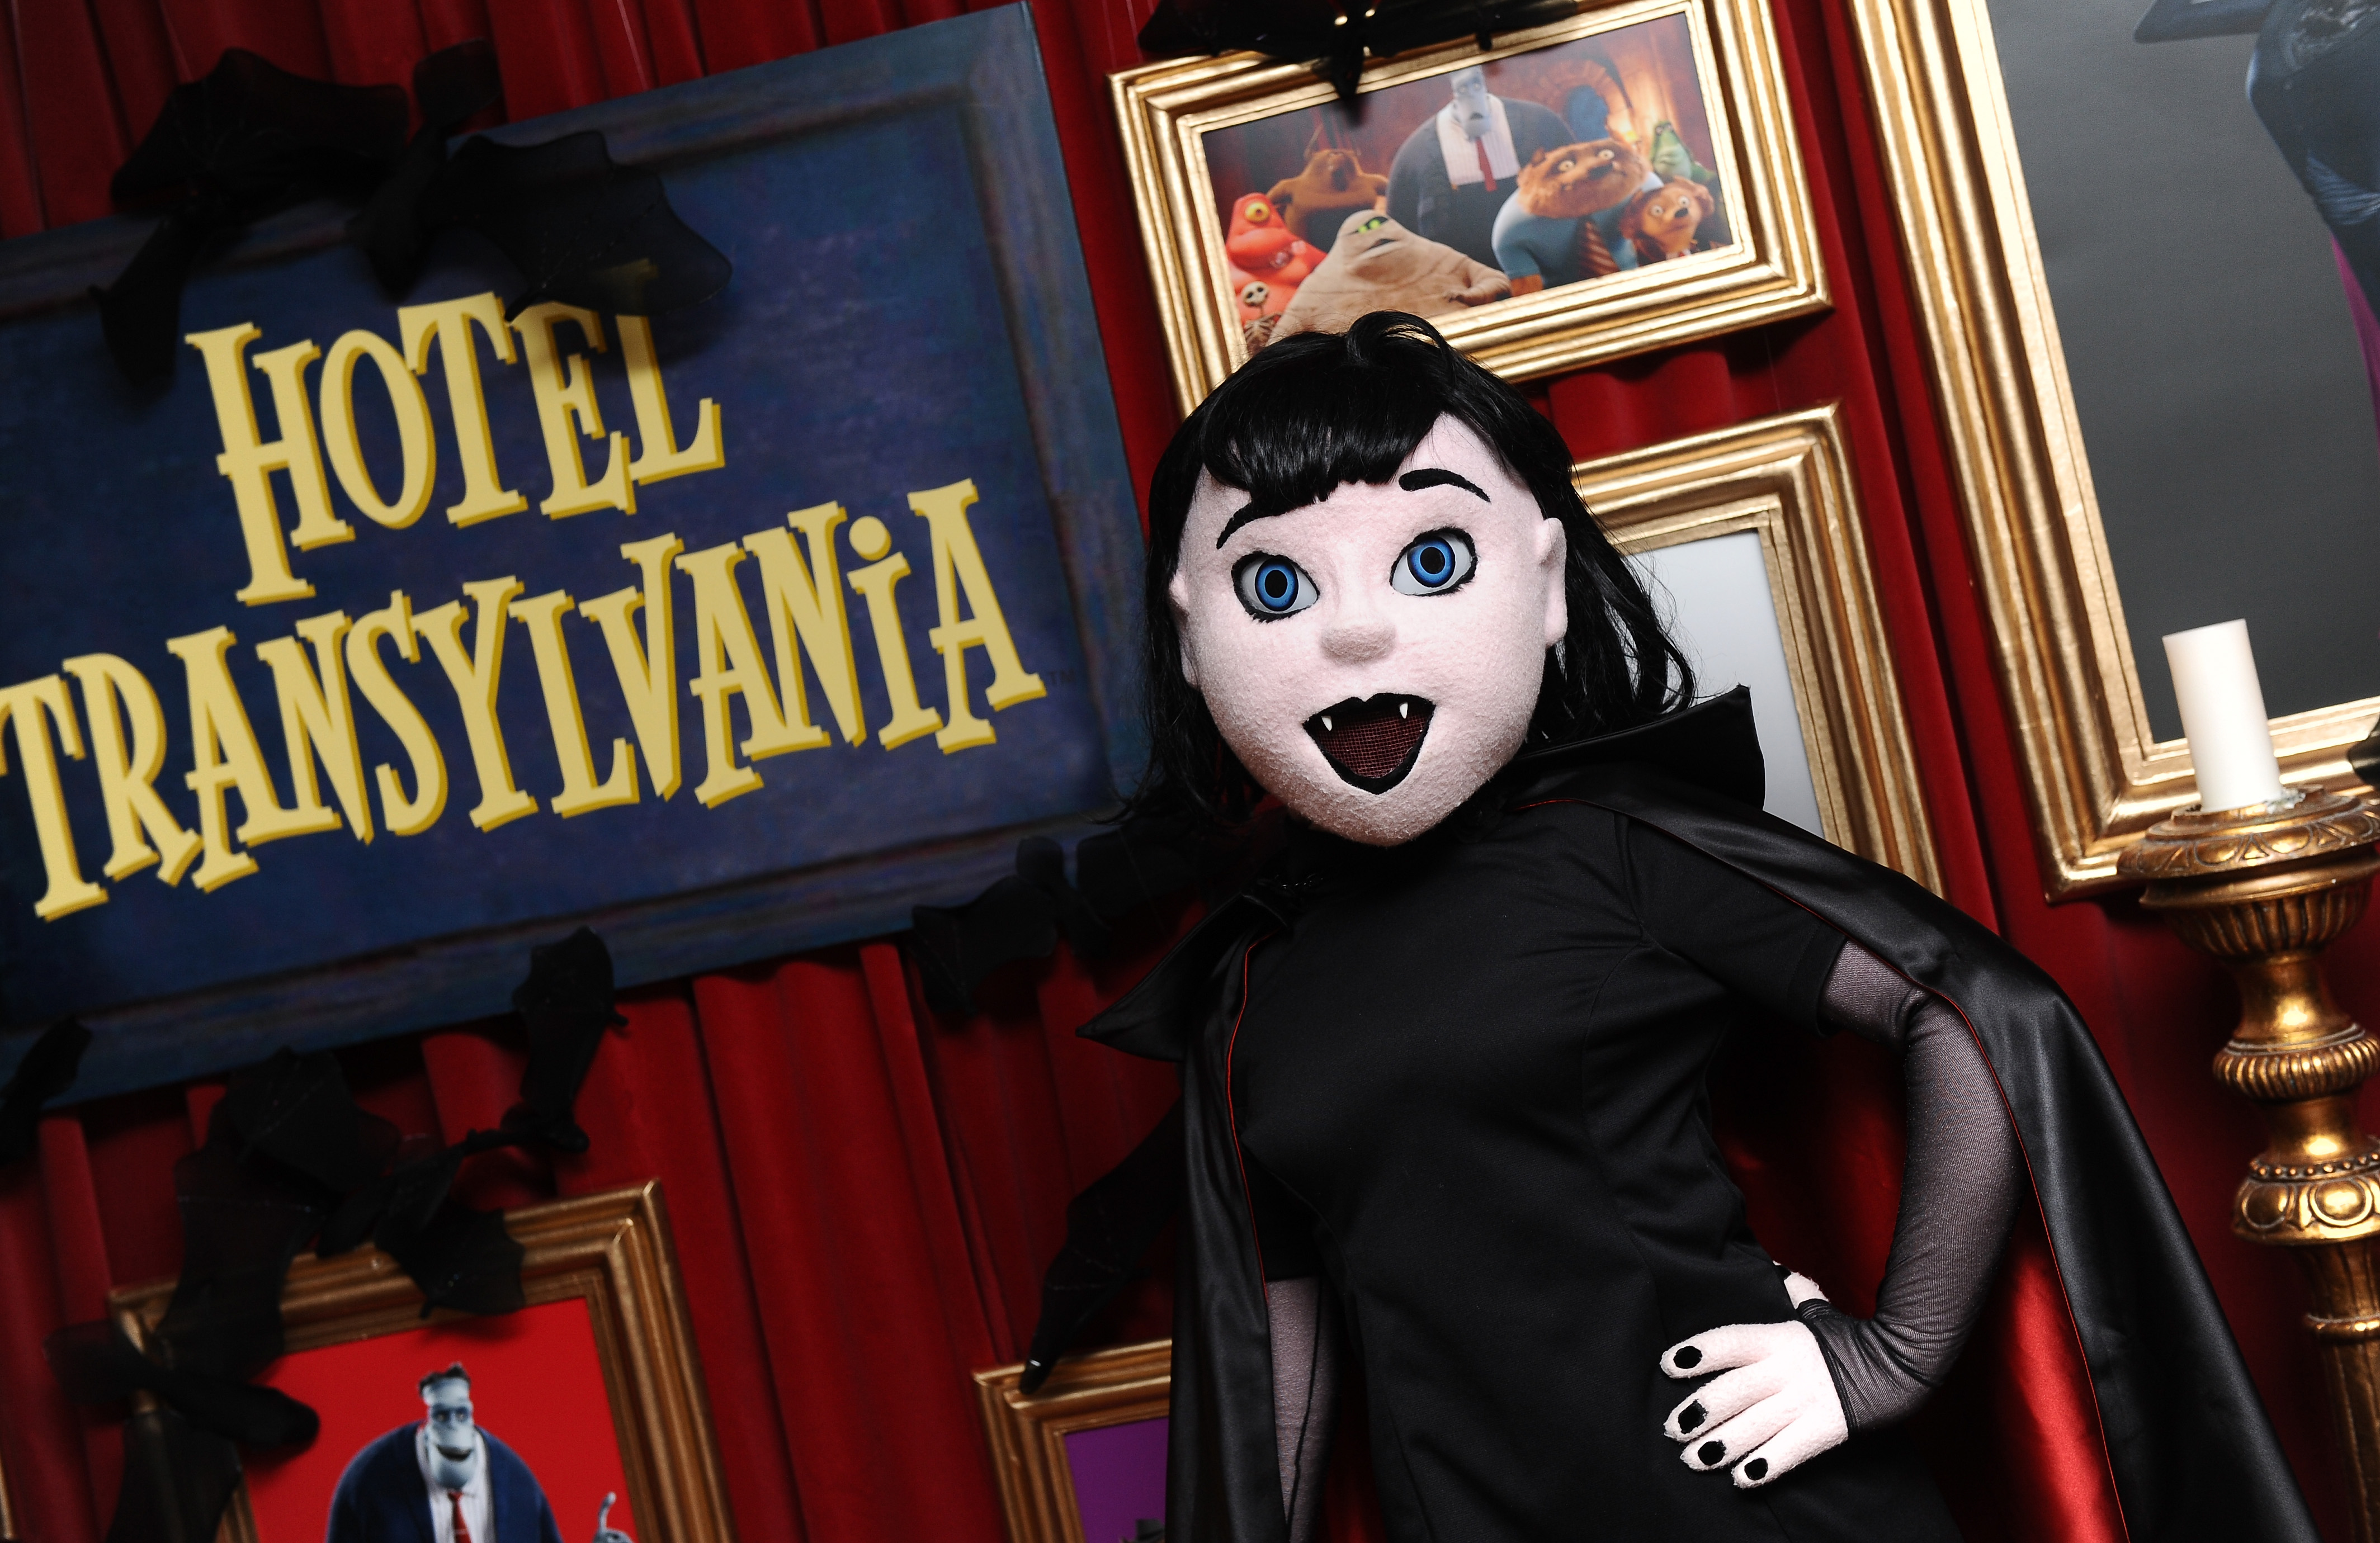 Hotel Transylvania vampire character poses for a photo